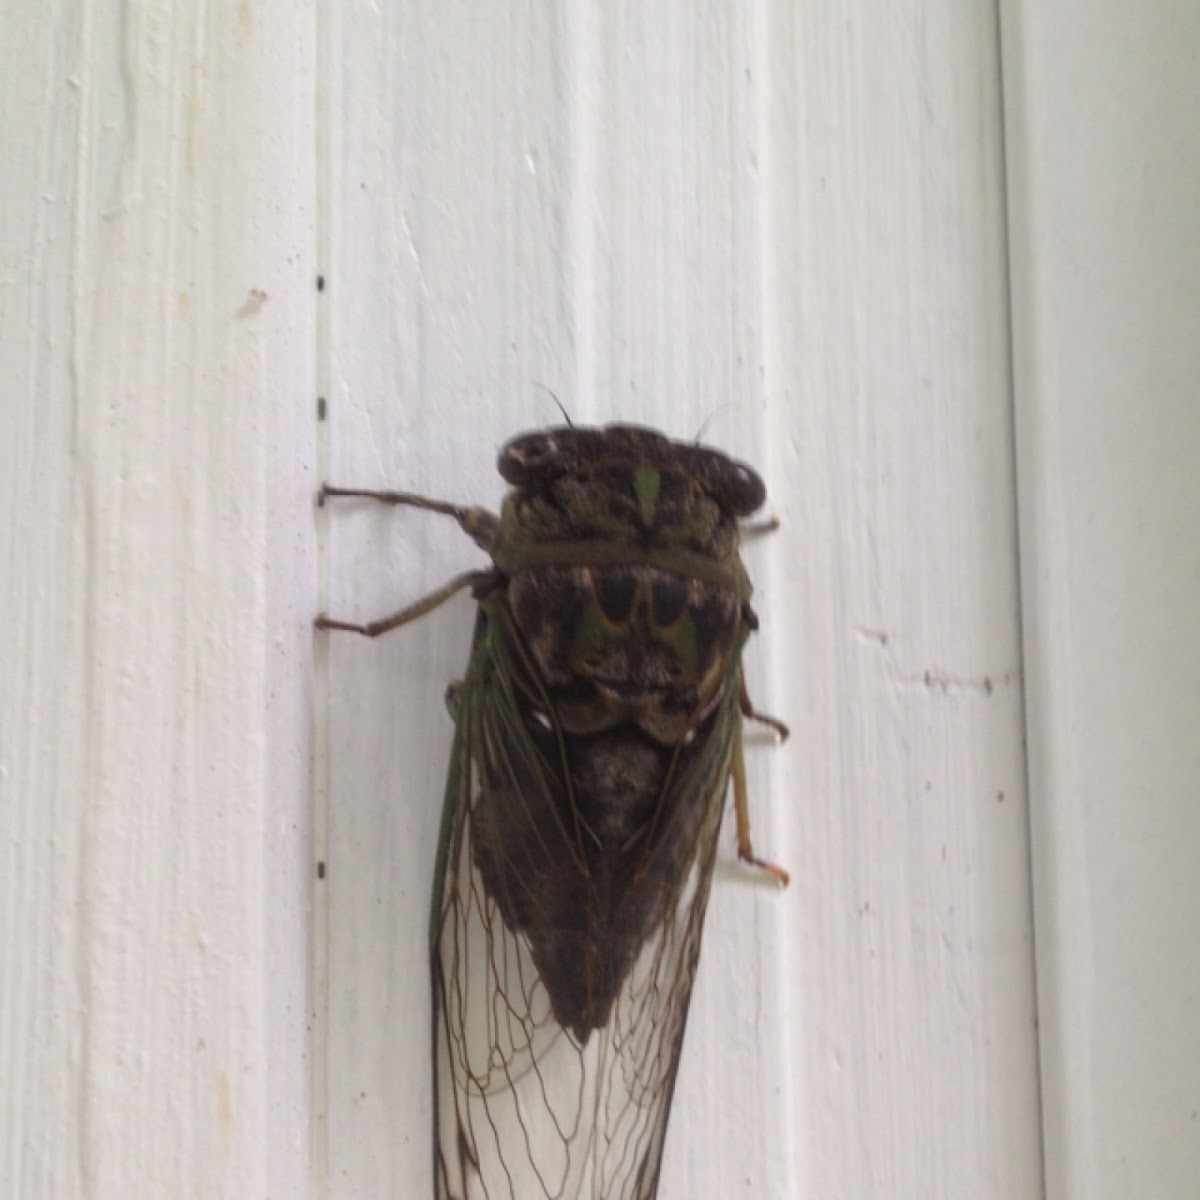 Dog Day cicada